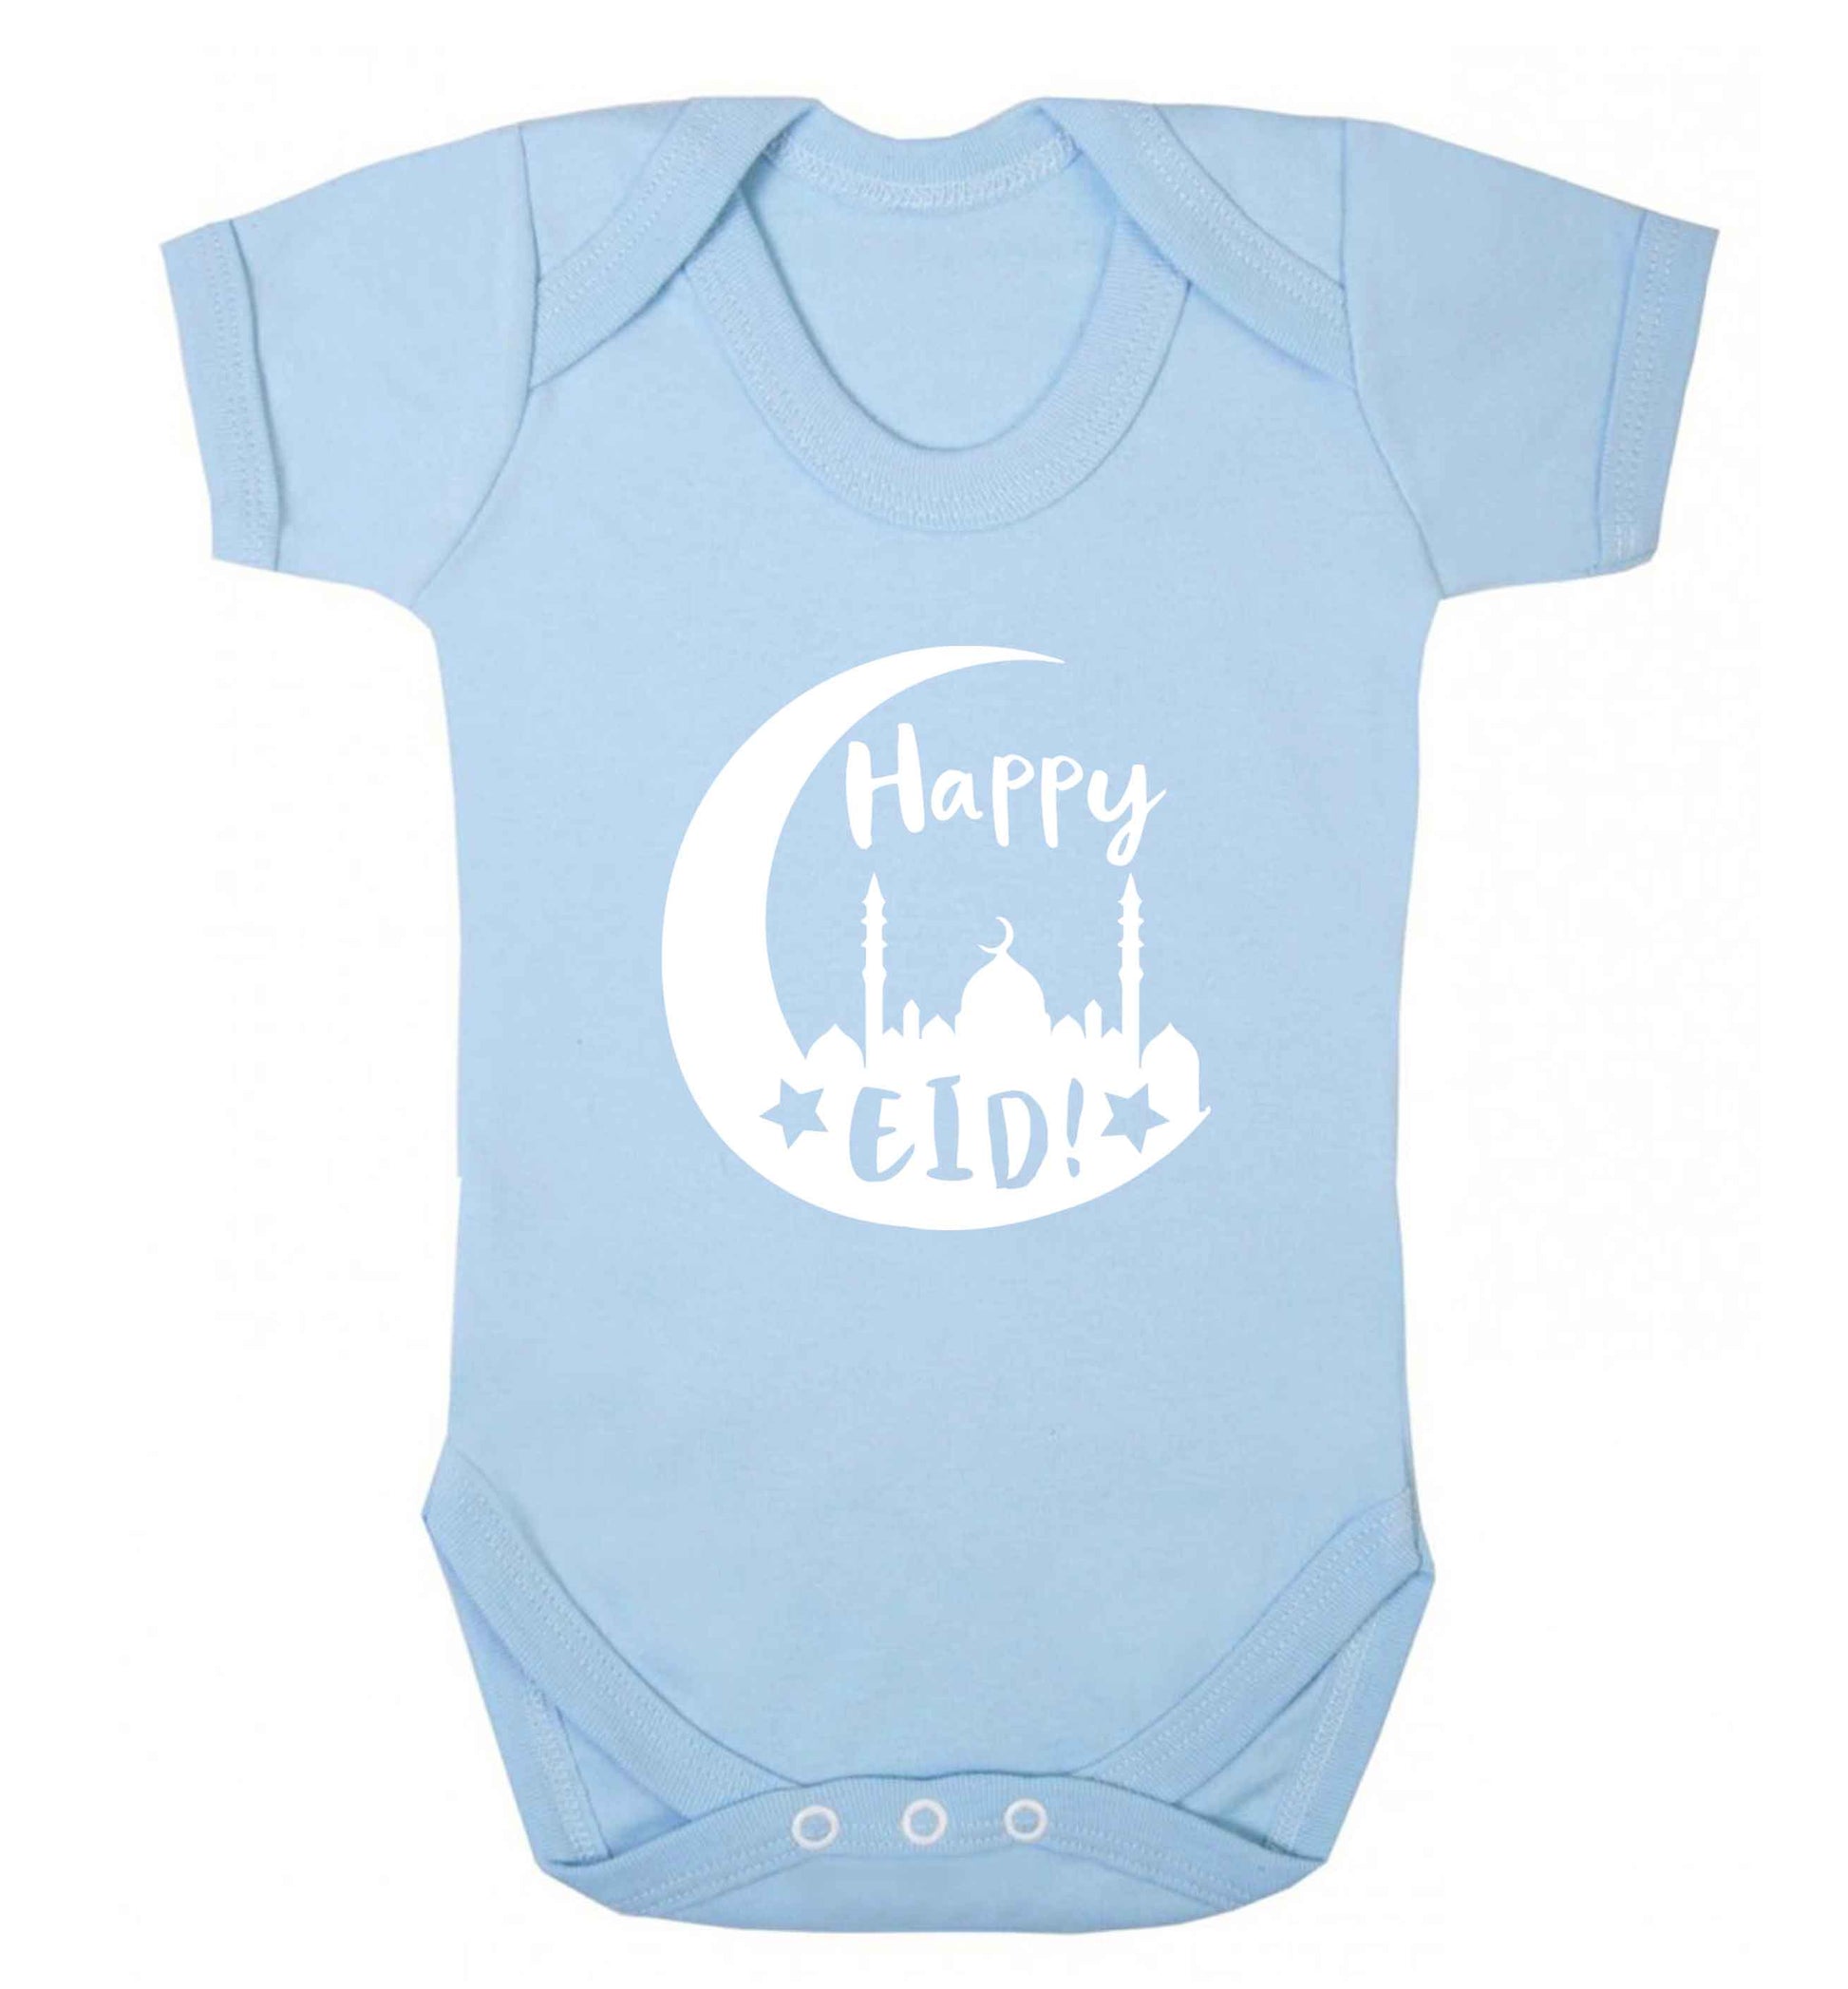 Happy Eid baby vest pale blue 18-24 months